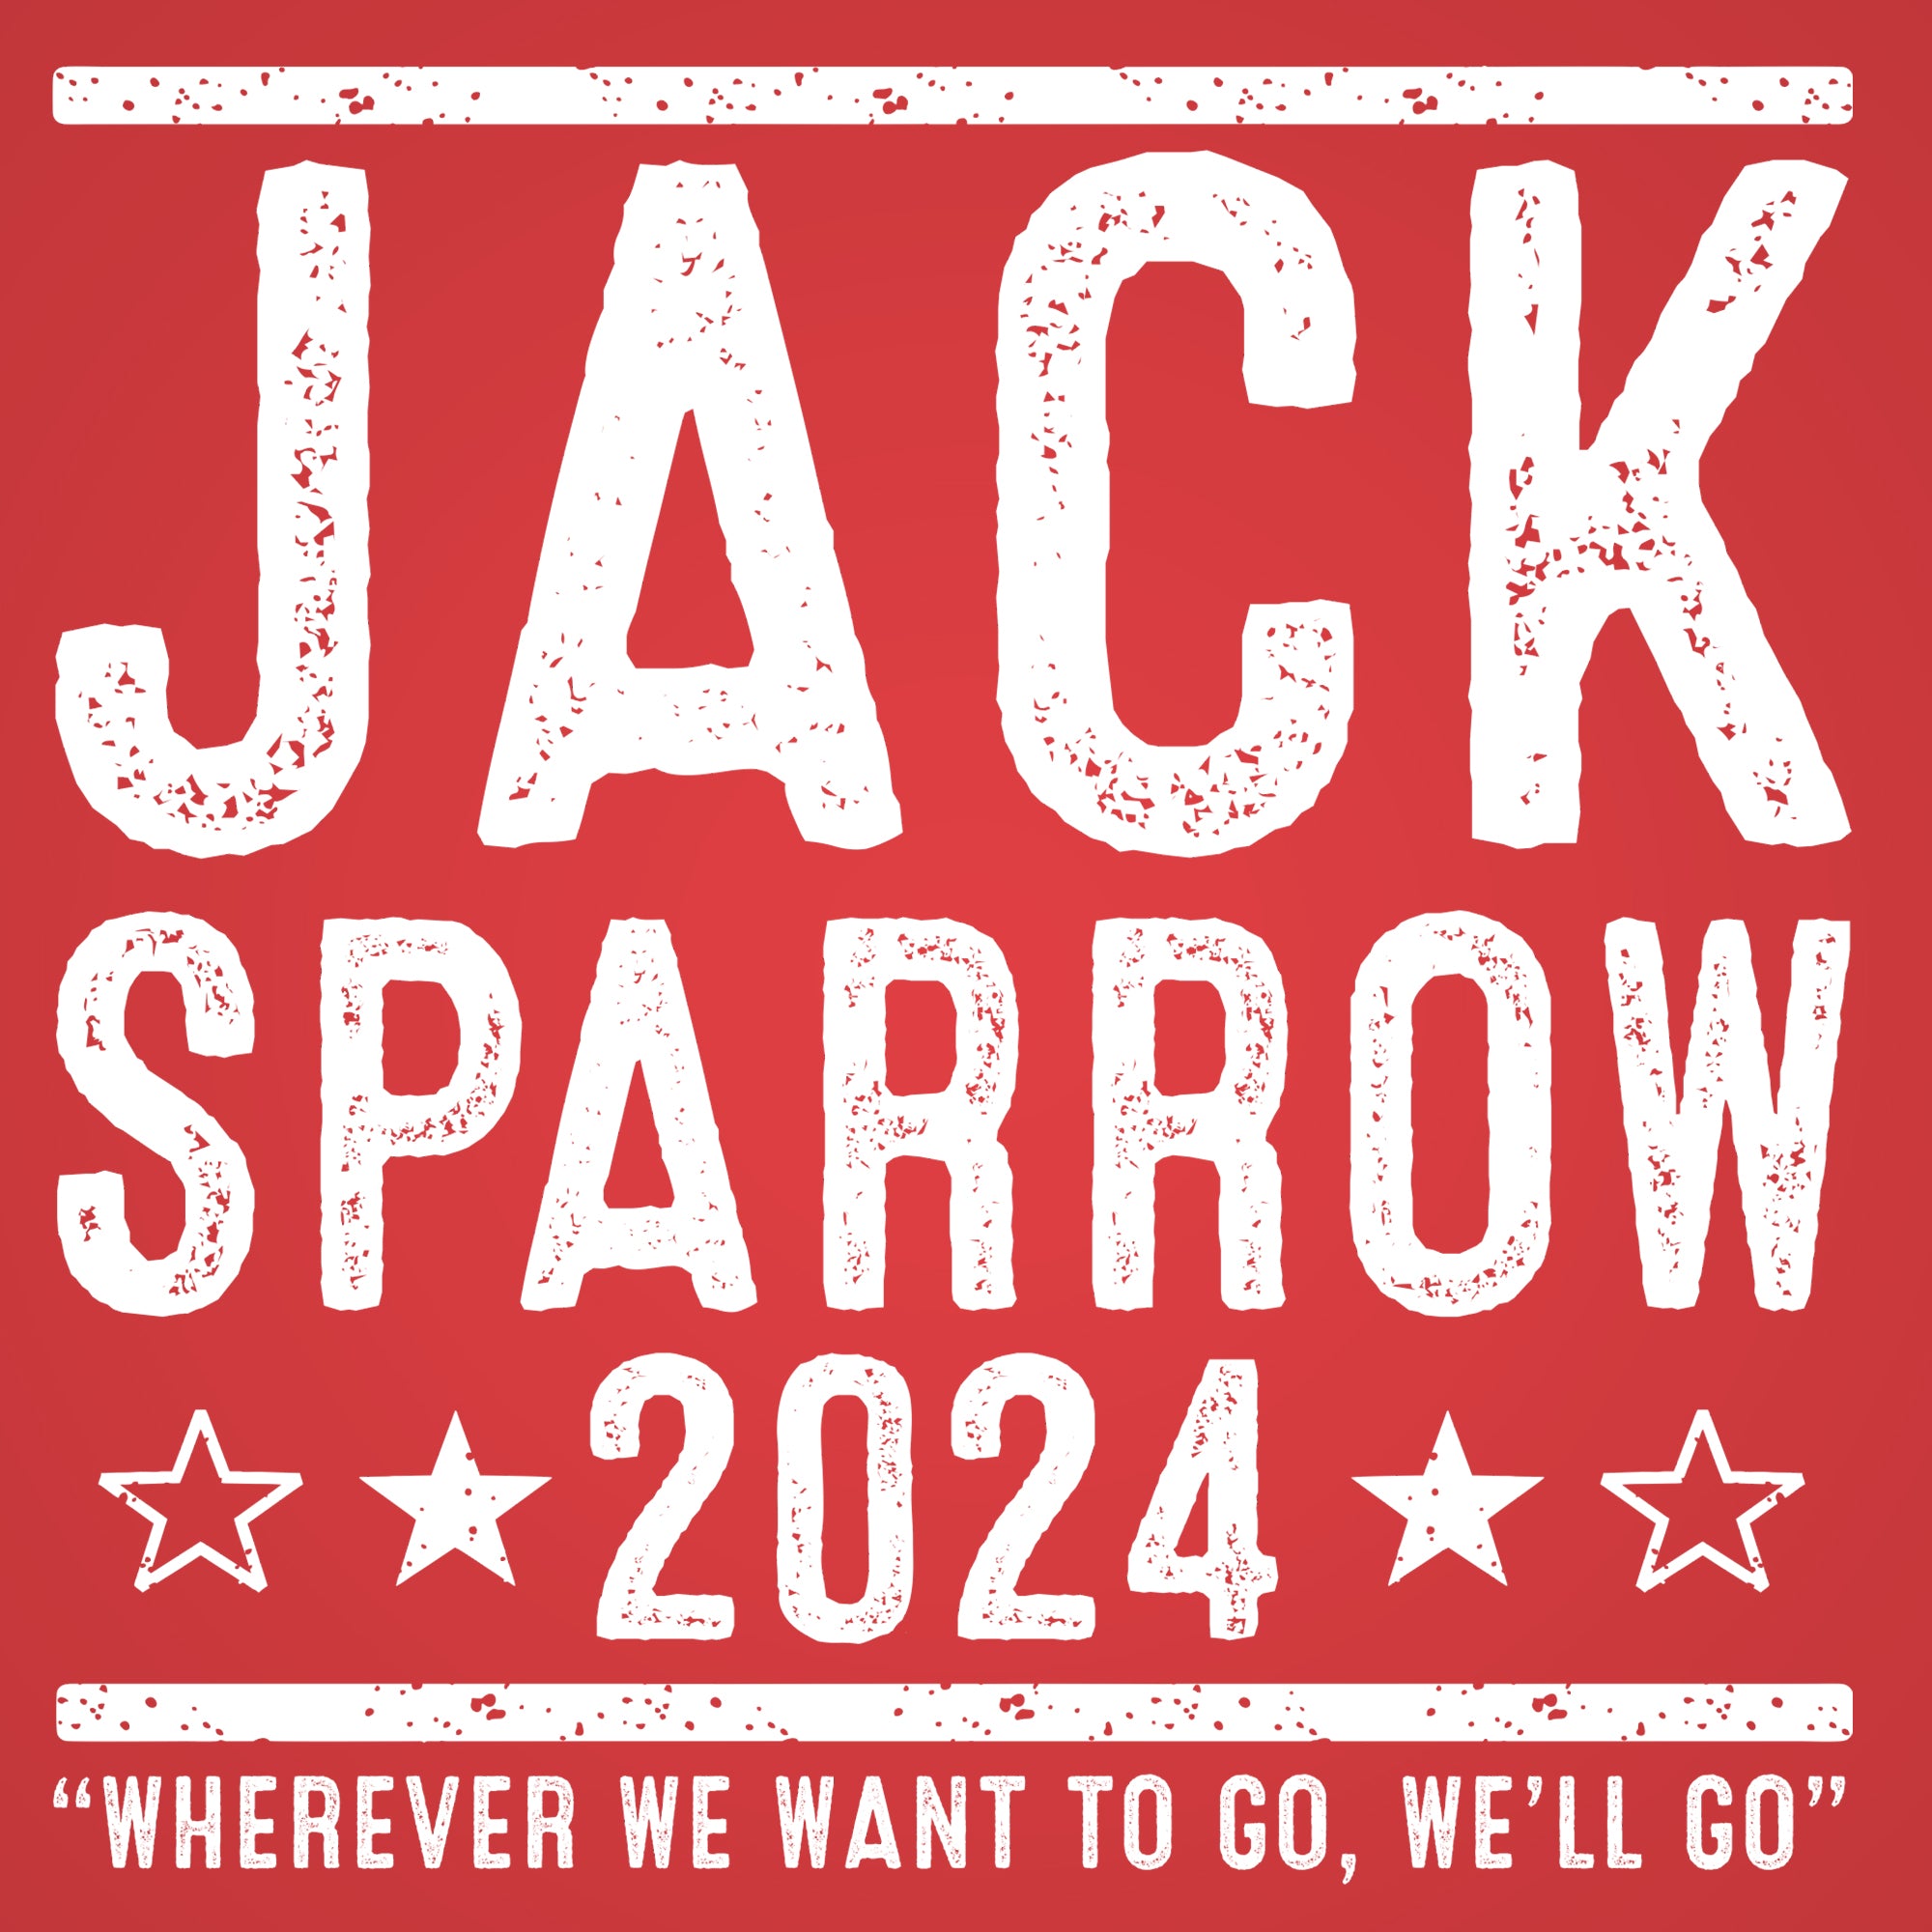 Jack Sparrow 2024 Election Tshirt - Donkey Tees